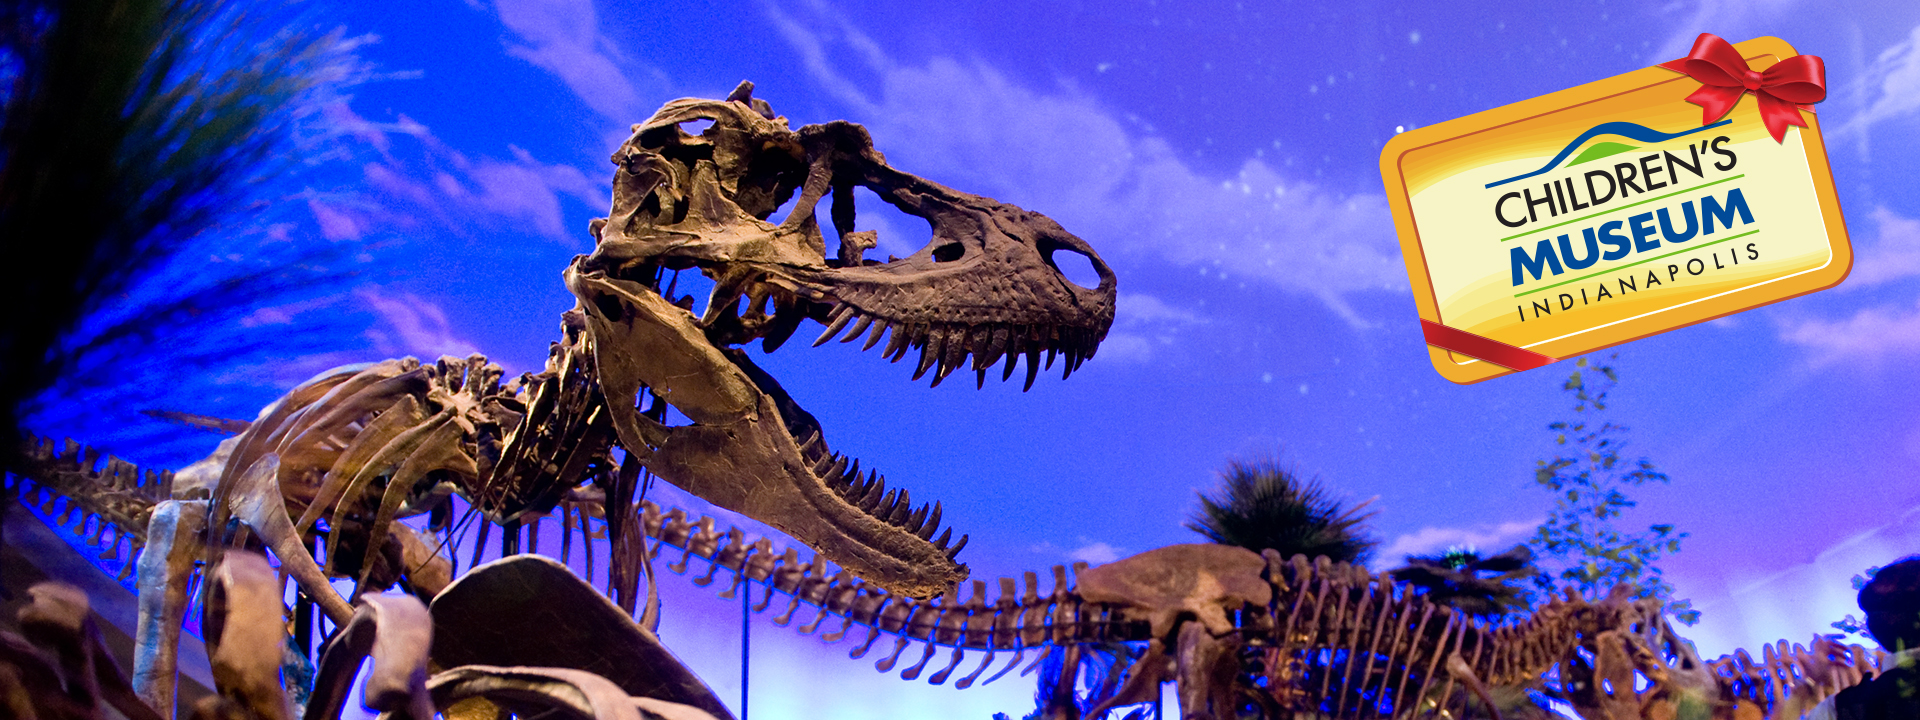 Dinosphere exhibit image featuring a T. rex